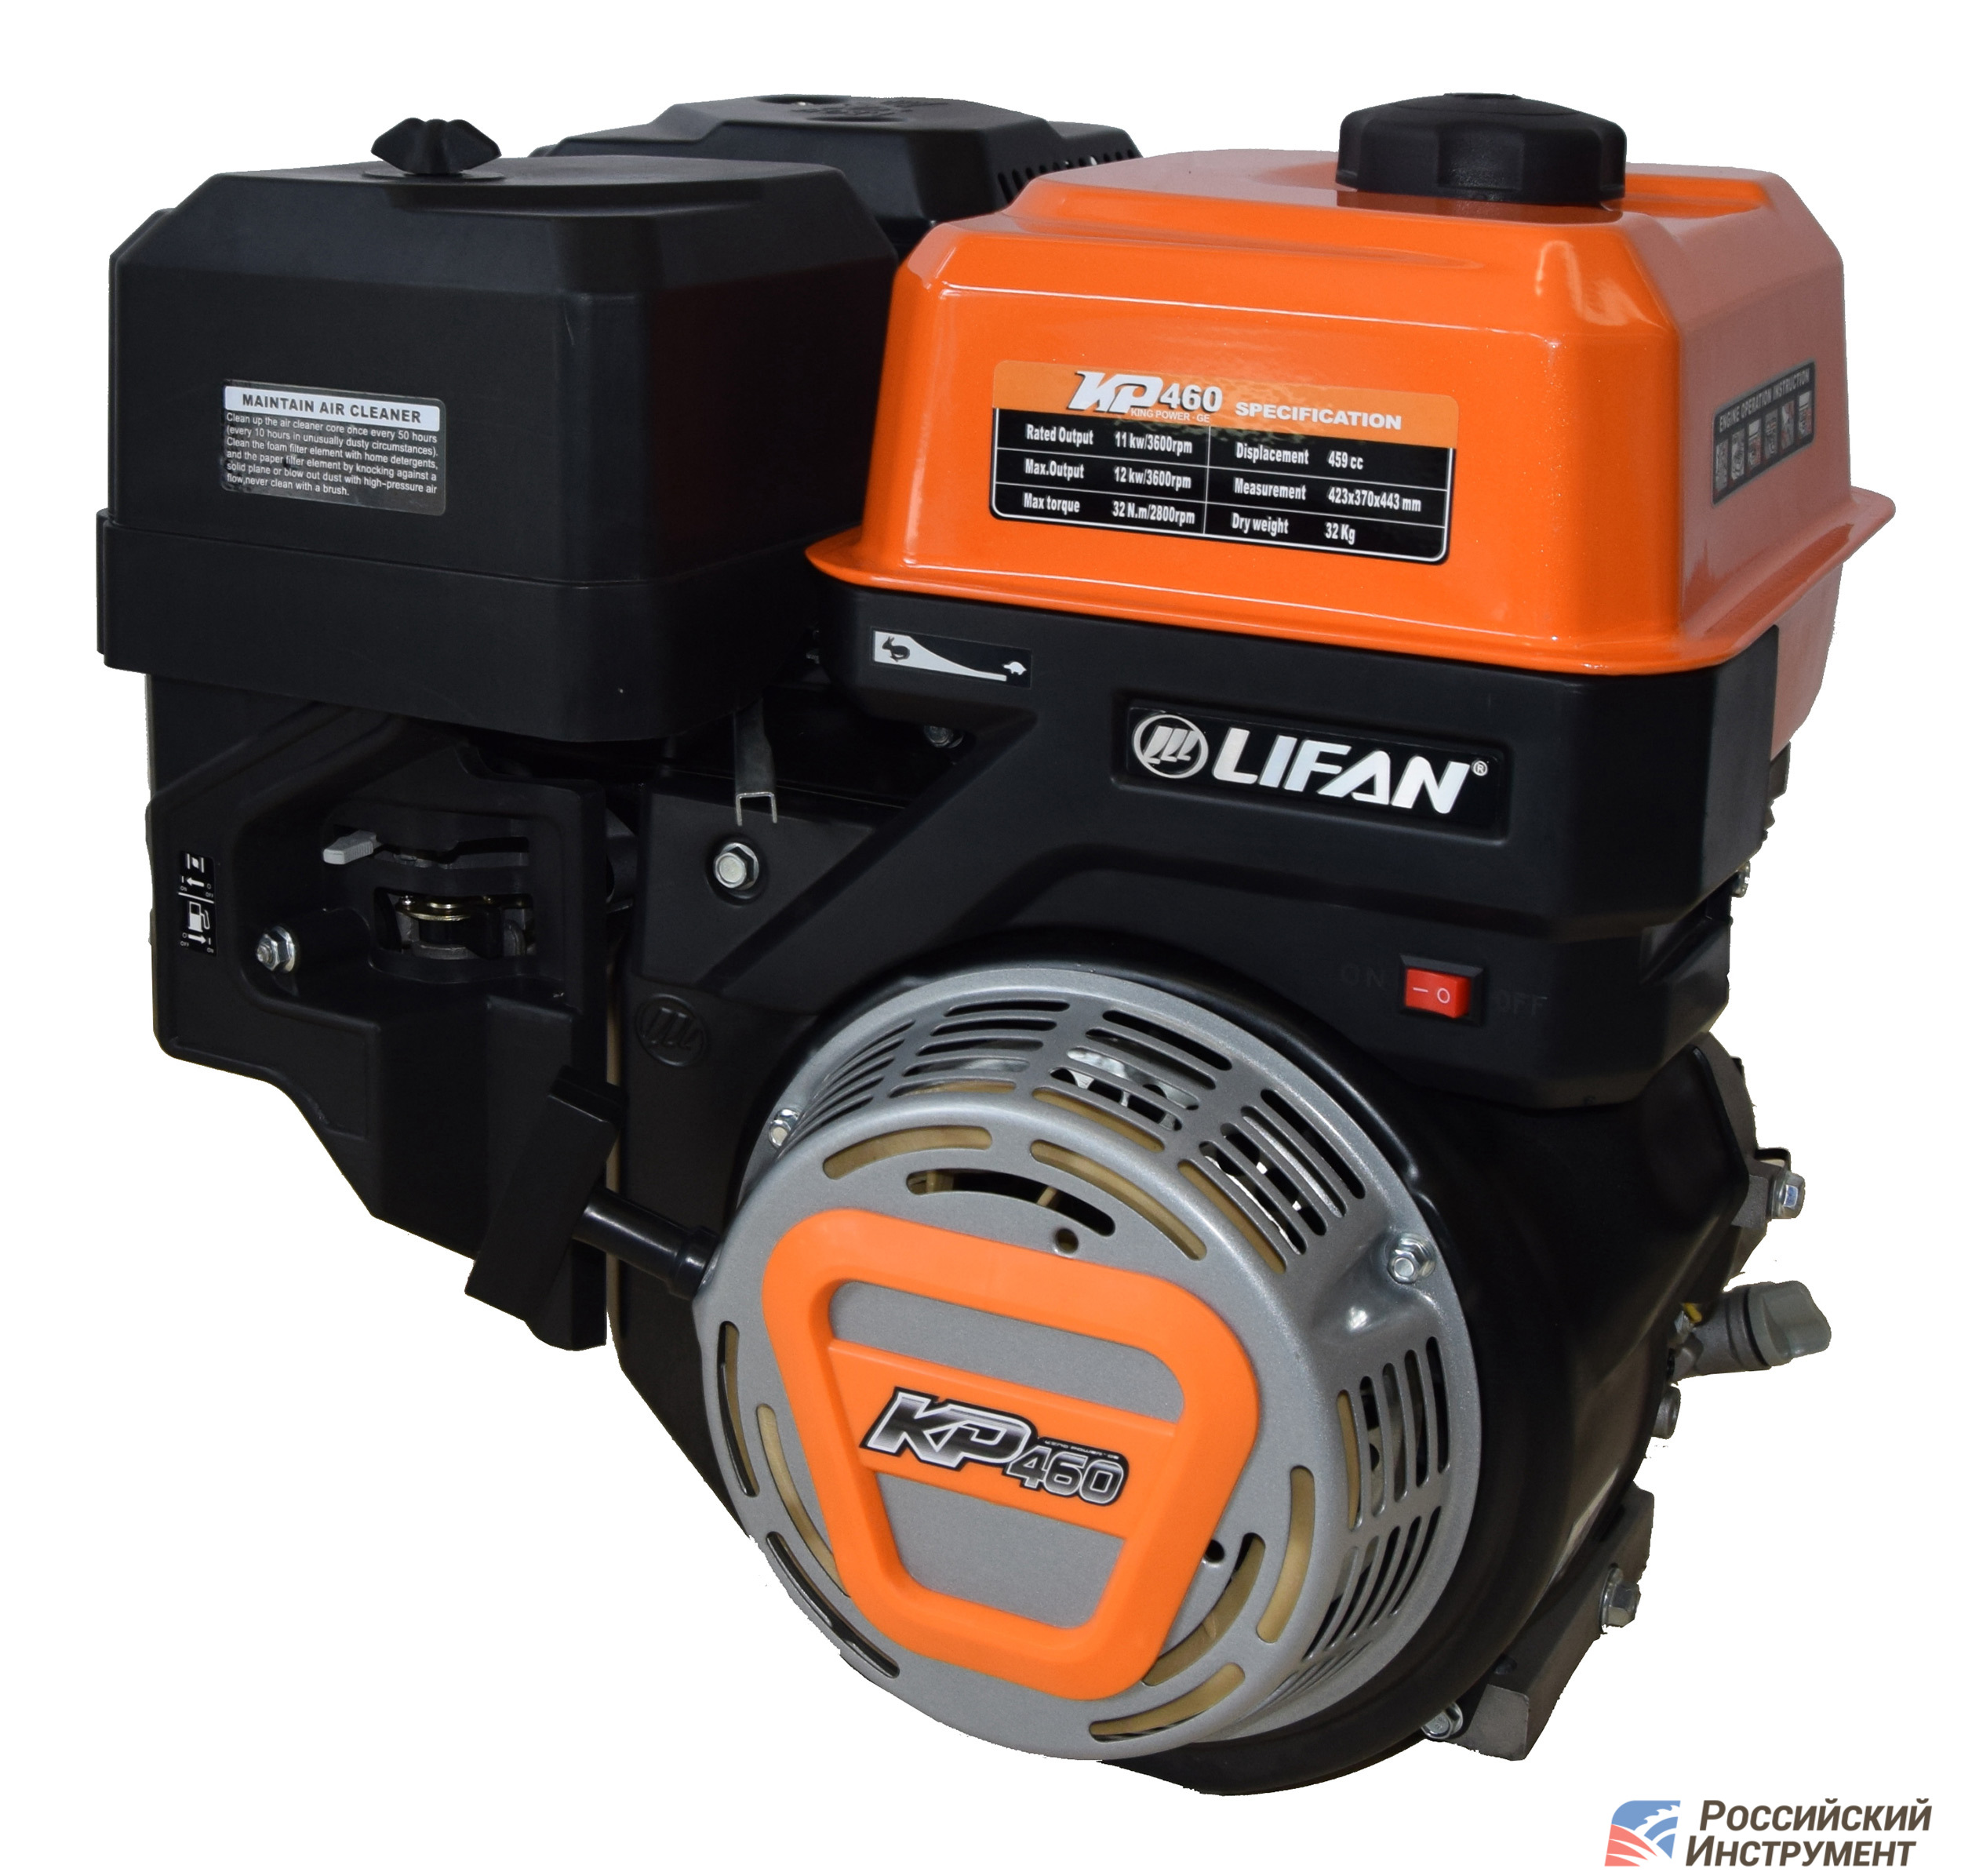 Двигатель лифан 20 л с цена купить. Двигатель Lifan 192f-2. Двигатель Lifan kp460e. Двигатель бензиновый Lifan kp460 (192f-2t) 20 л.с., вал 25 мм стартирам. Двигатель Lifan kp460 192f-2t.